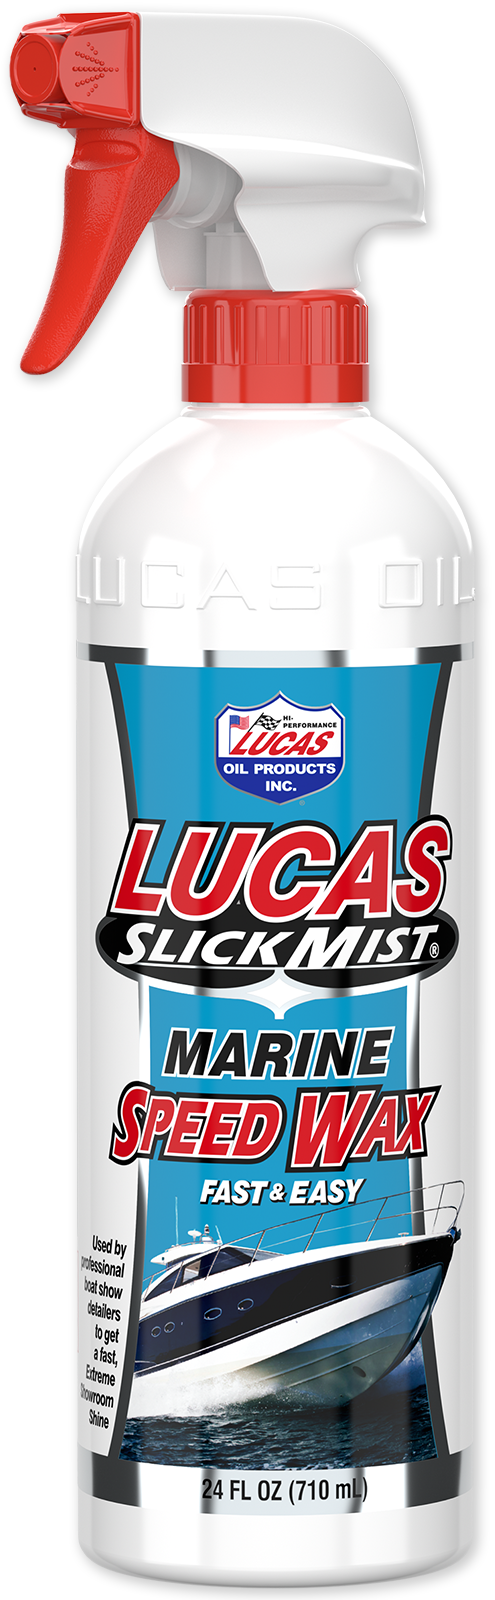 TEST] Lucas Oil Slick Mist CERAMIC Speed Wax vs The Gauntlet 